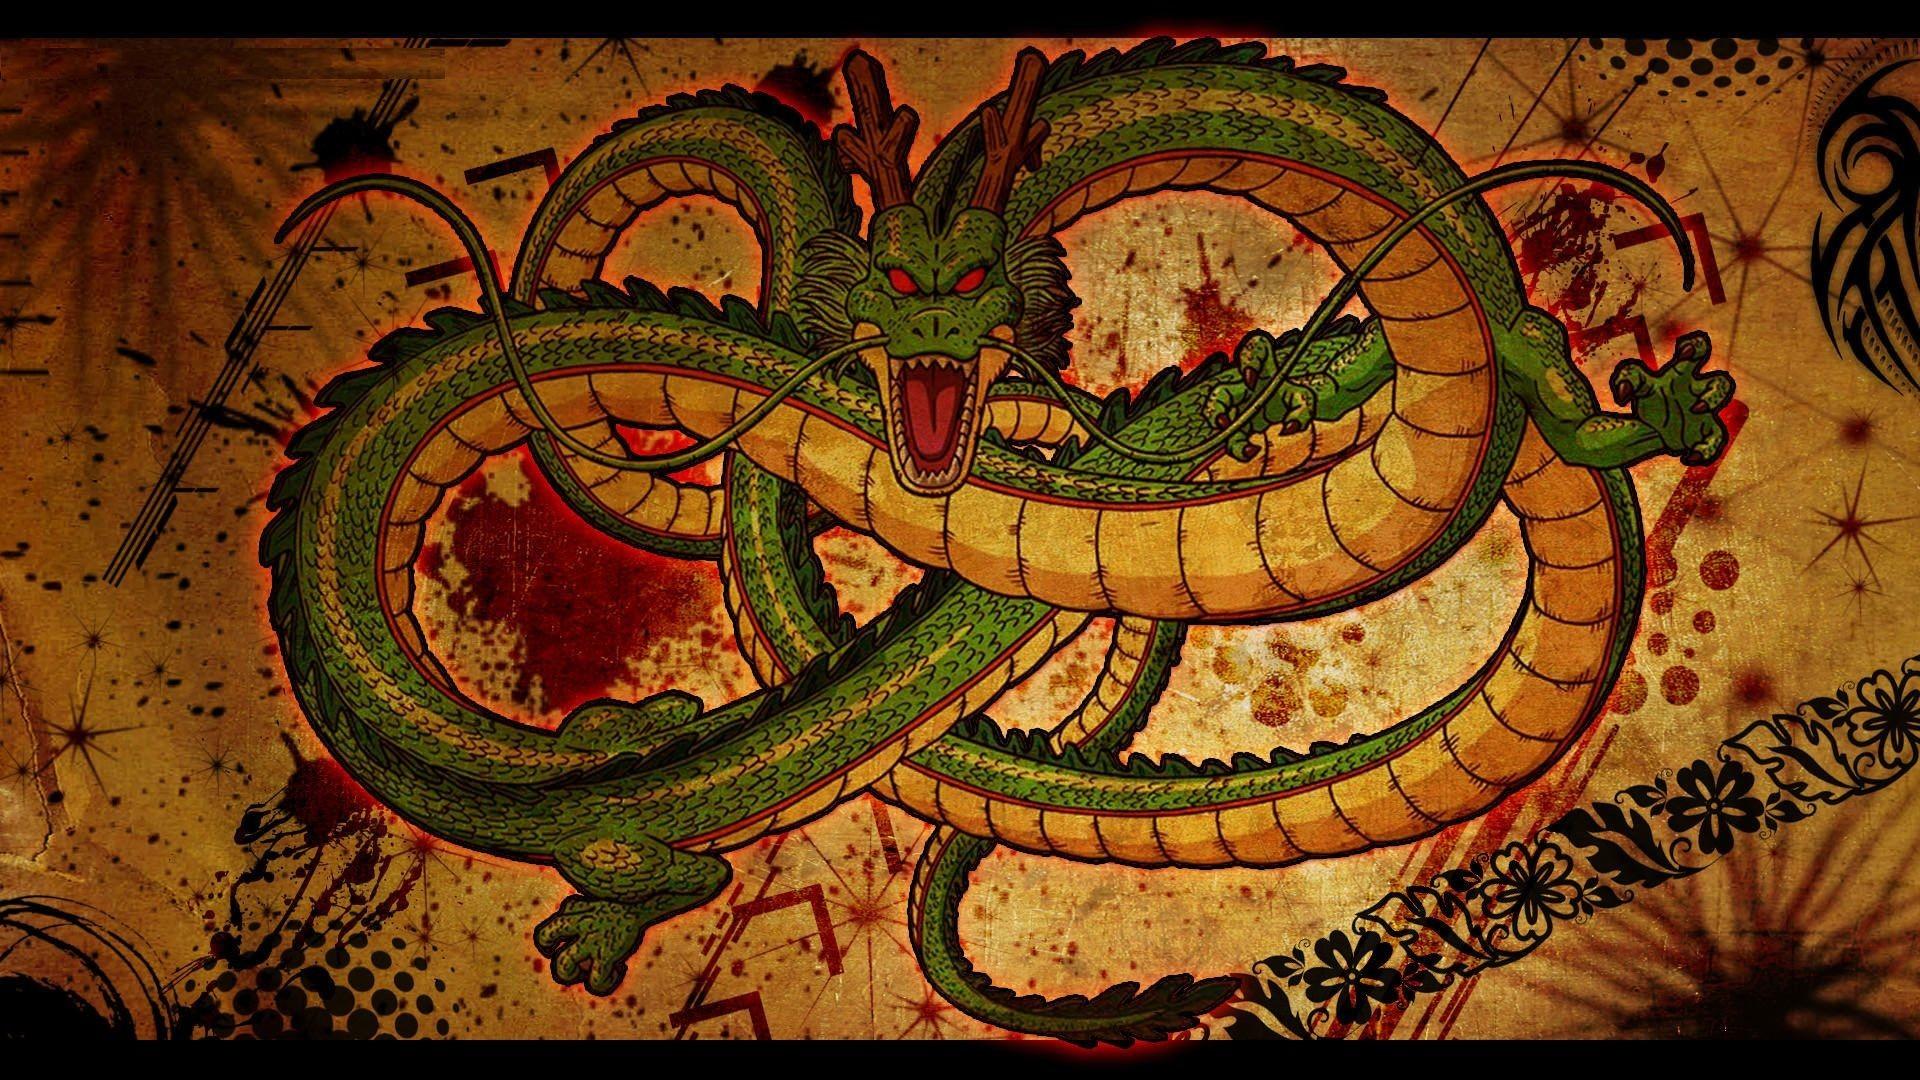 Asian Dragon Wallpaper